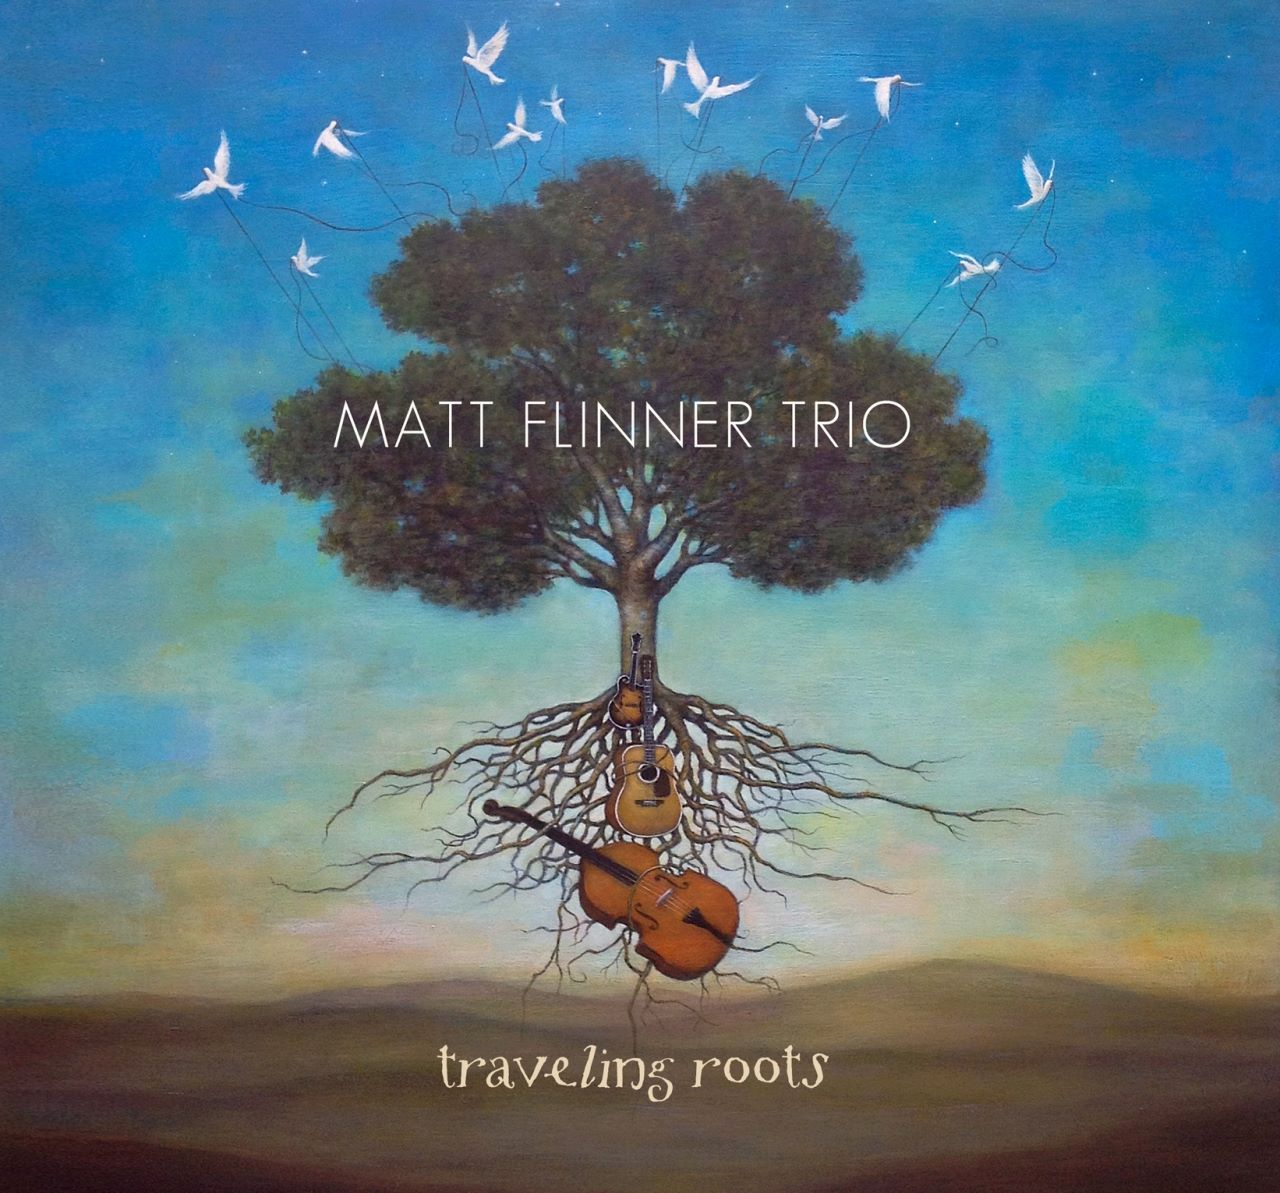 Matt Flinner Trio - Traveling Roots cover album